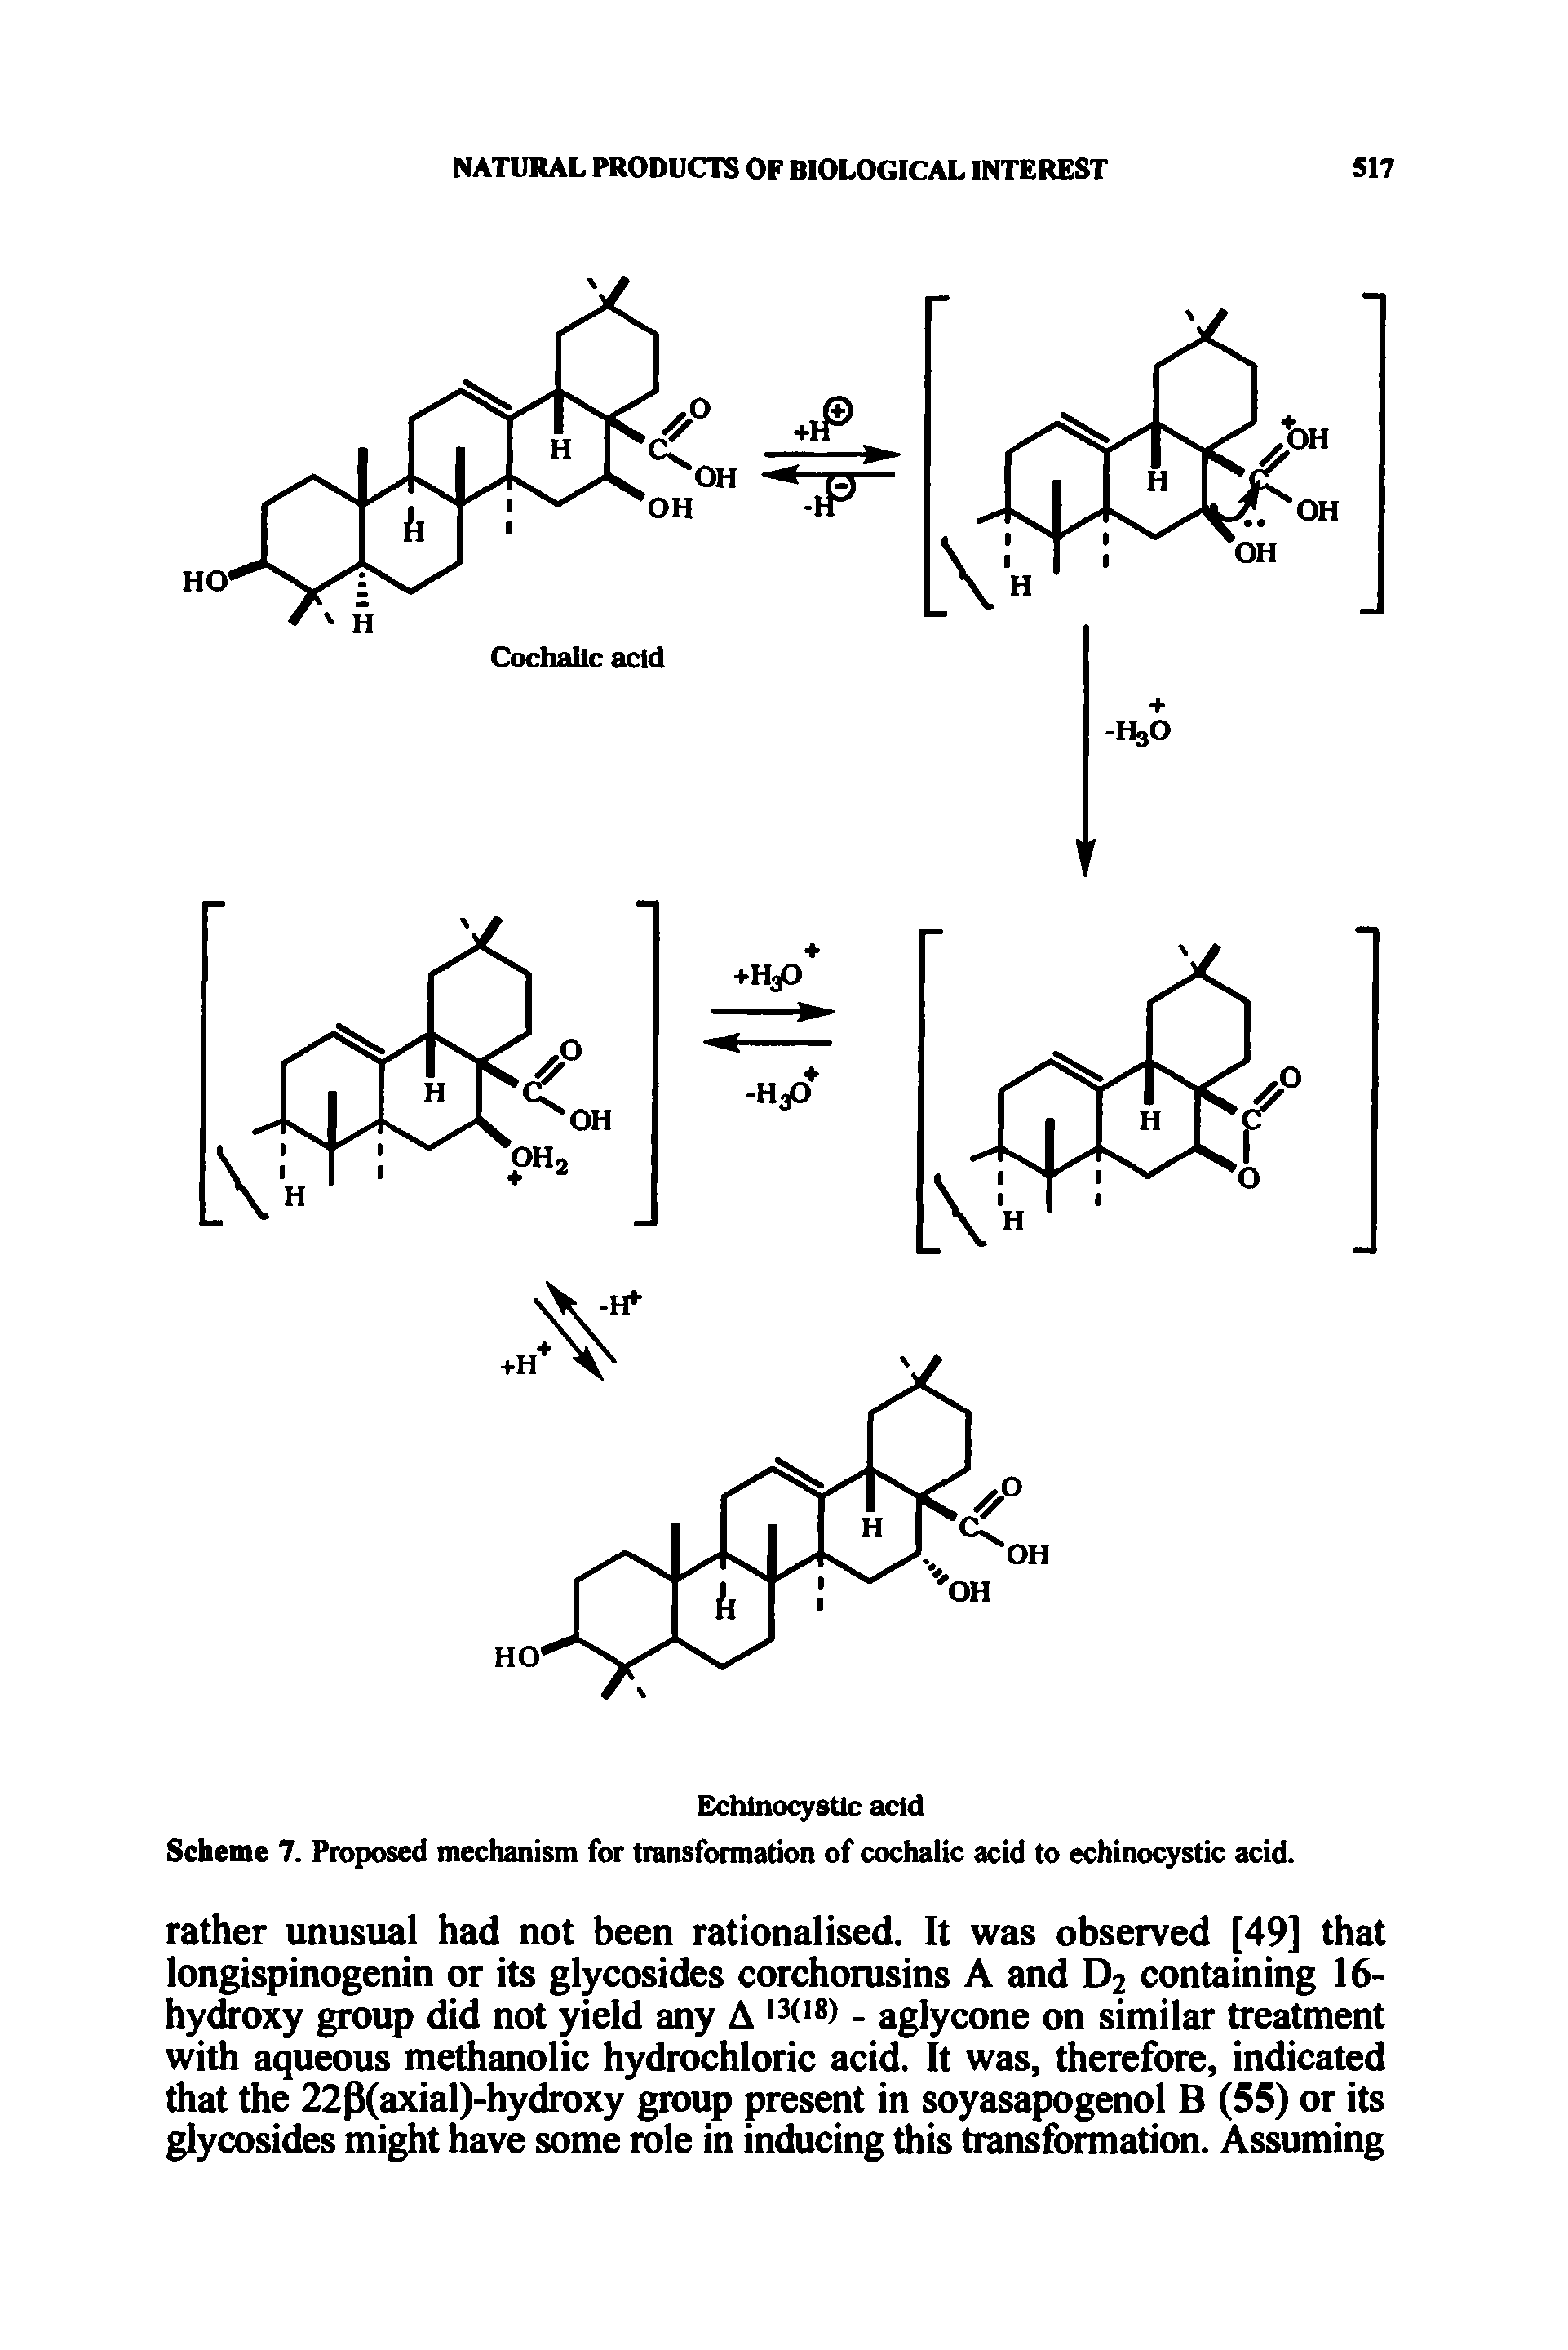 Scheme 7. Proposed mechanism for transformation of cochalic acid to echinocystic acid.